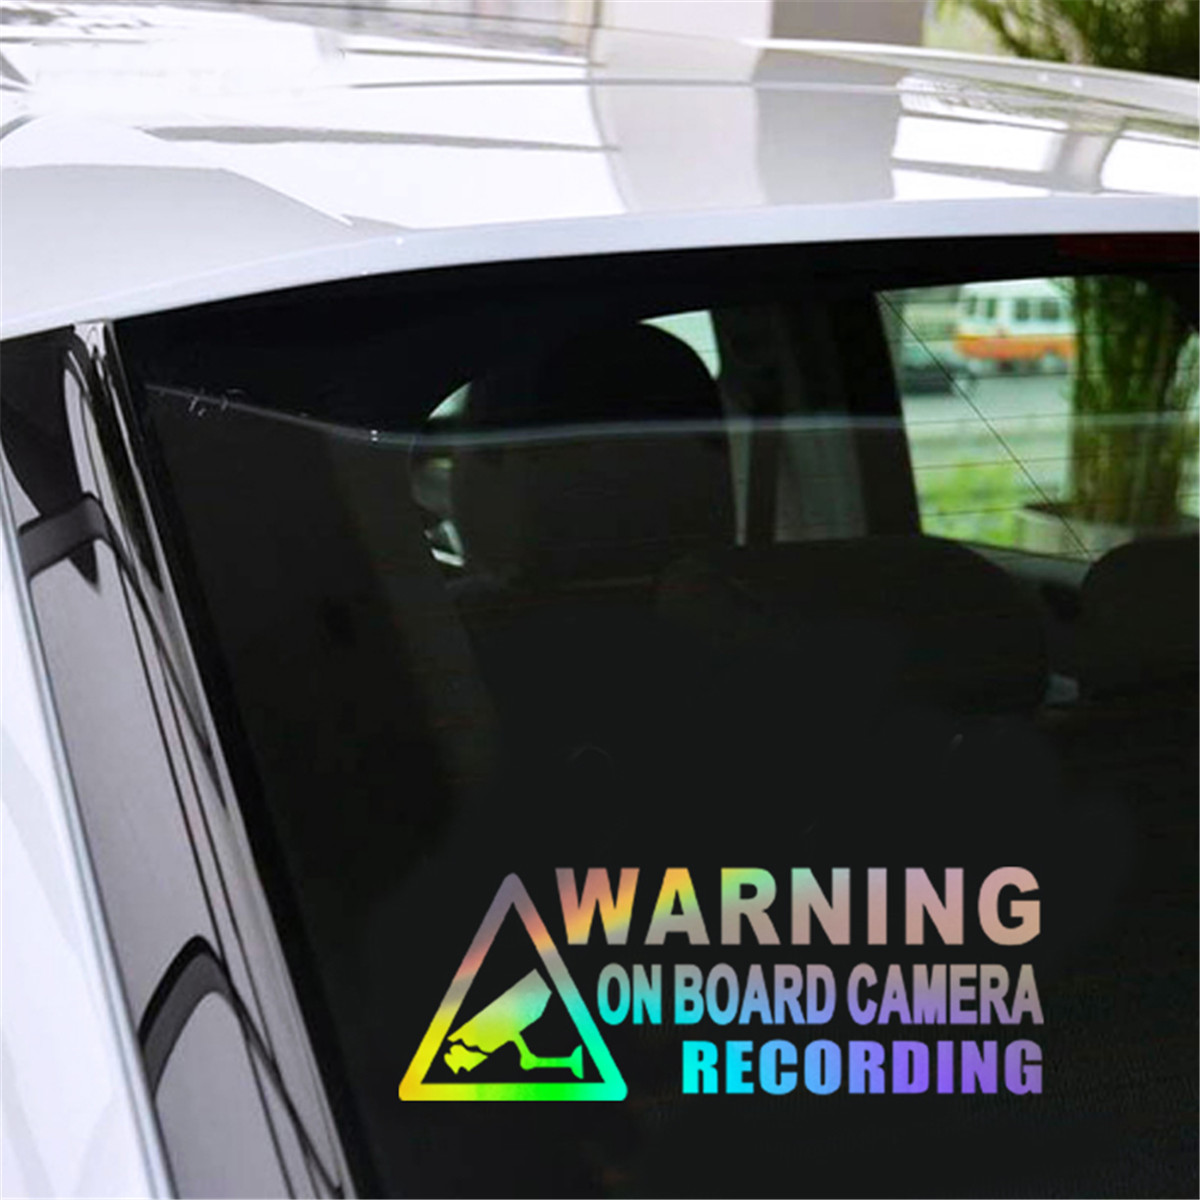 1x Warning On Board Camera Recording Auto Car Window Truck Sticker Accessories